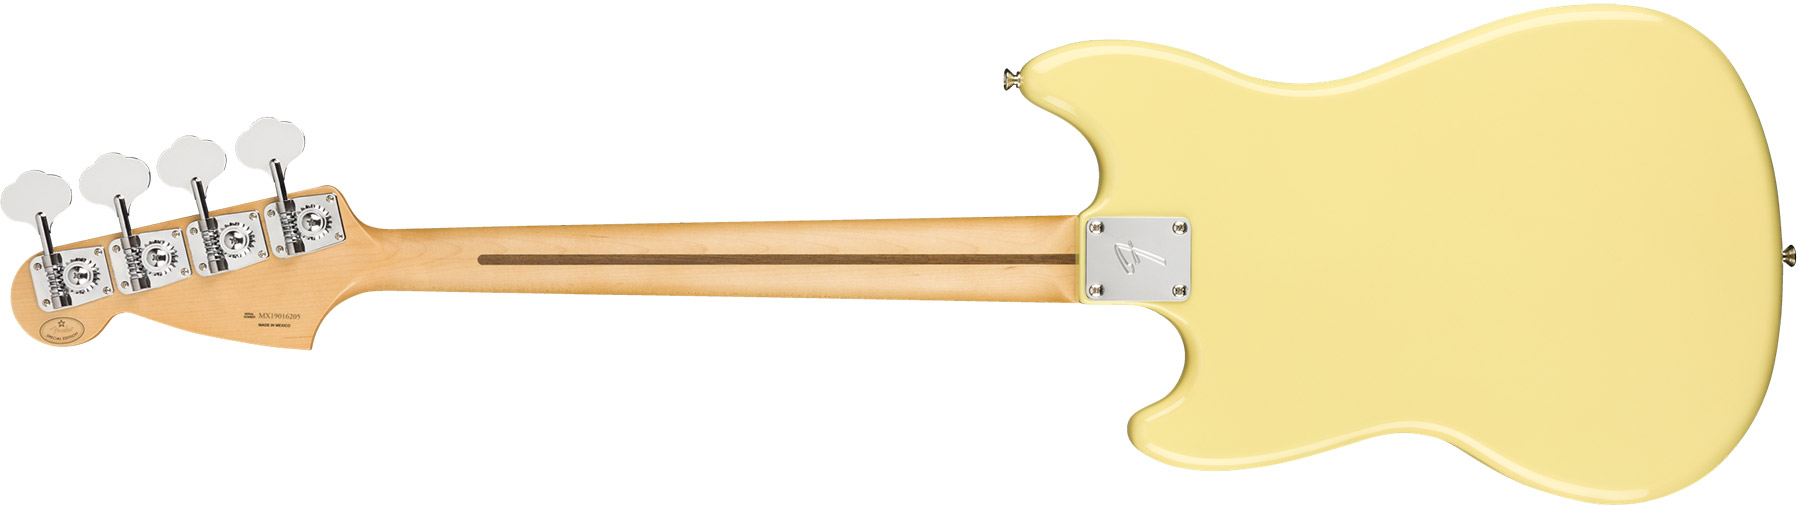 Fender Player Mustang Bass Pj Ltd Mex Mn - Canary - Solid body elektrische bas - Variation 1